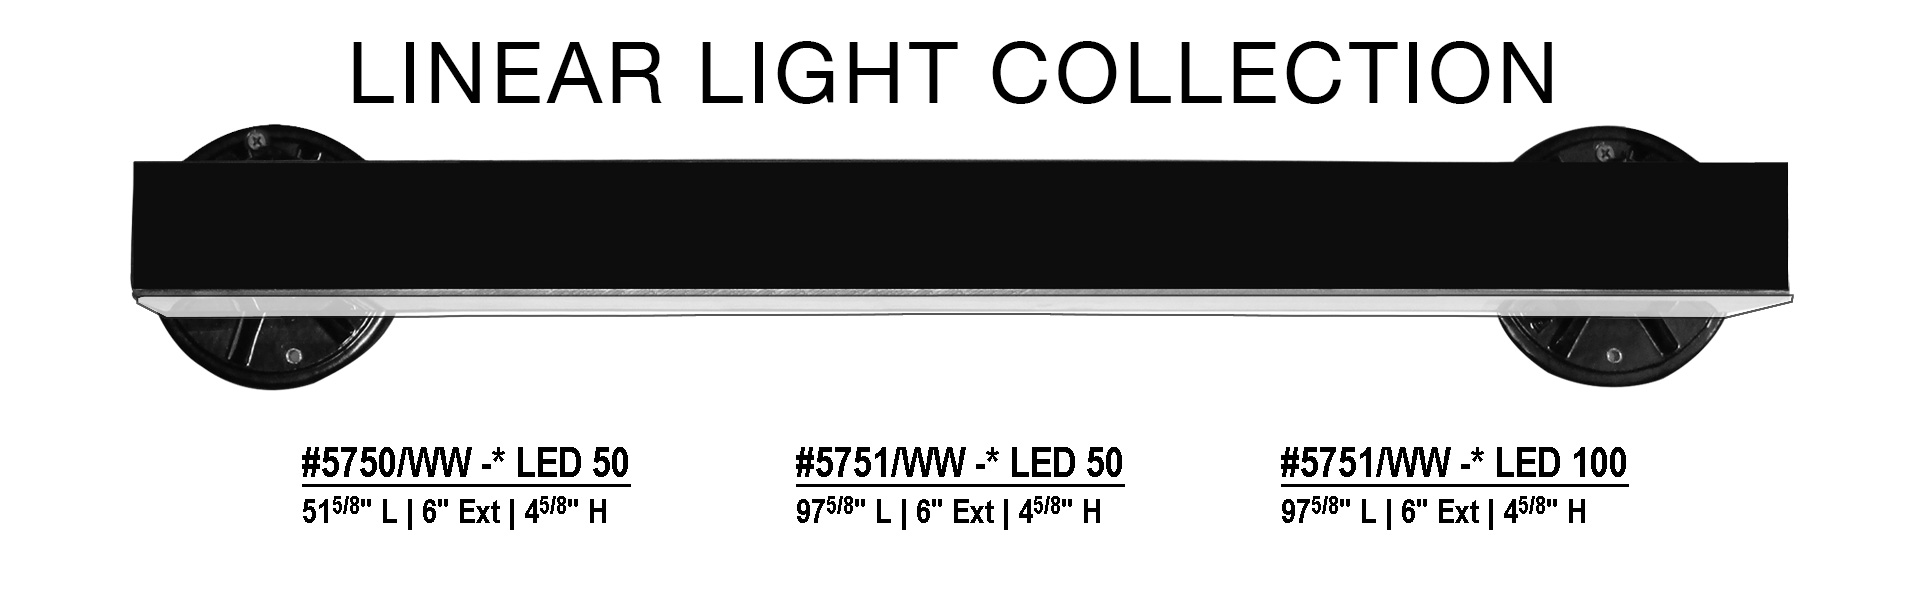 Linear Light #5750WW